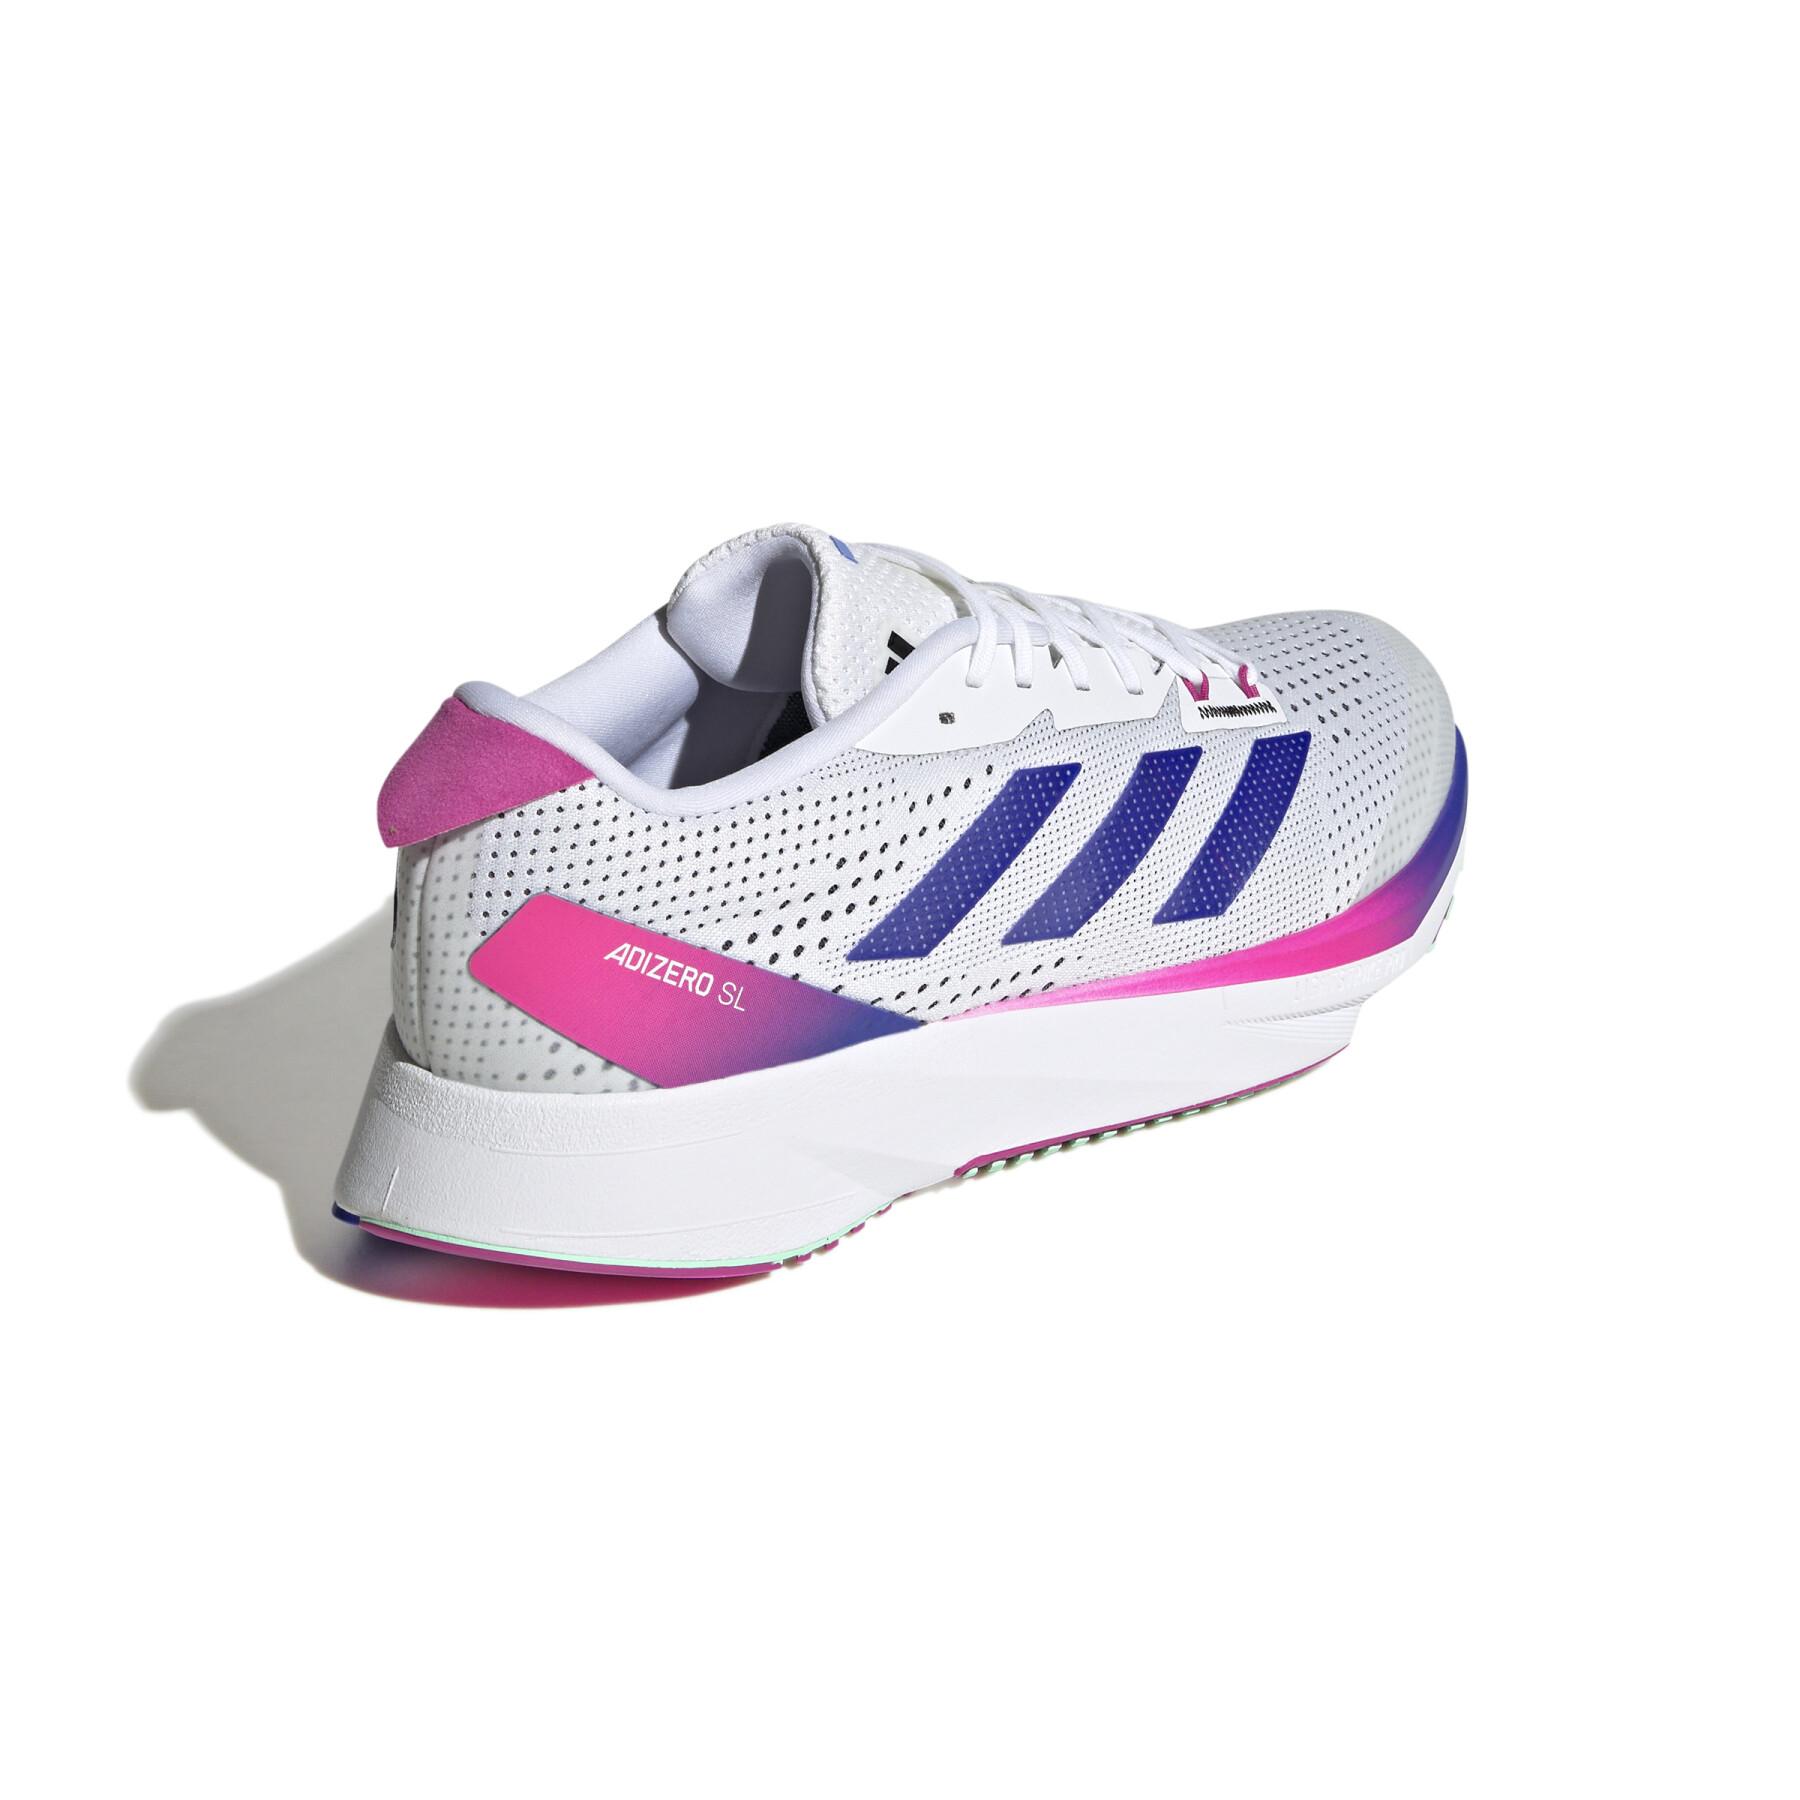 Shoes from running adidas Adizero SL